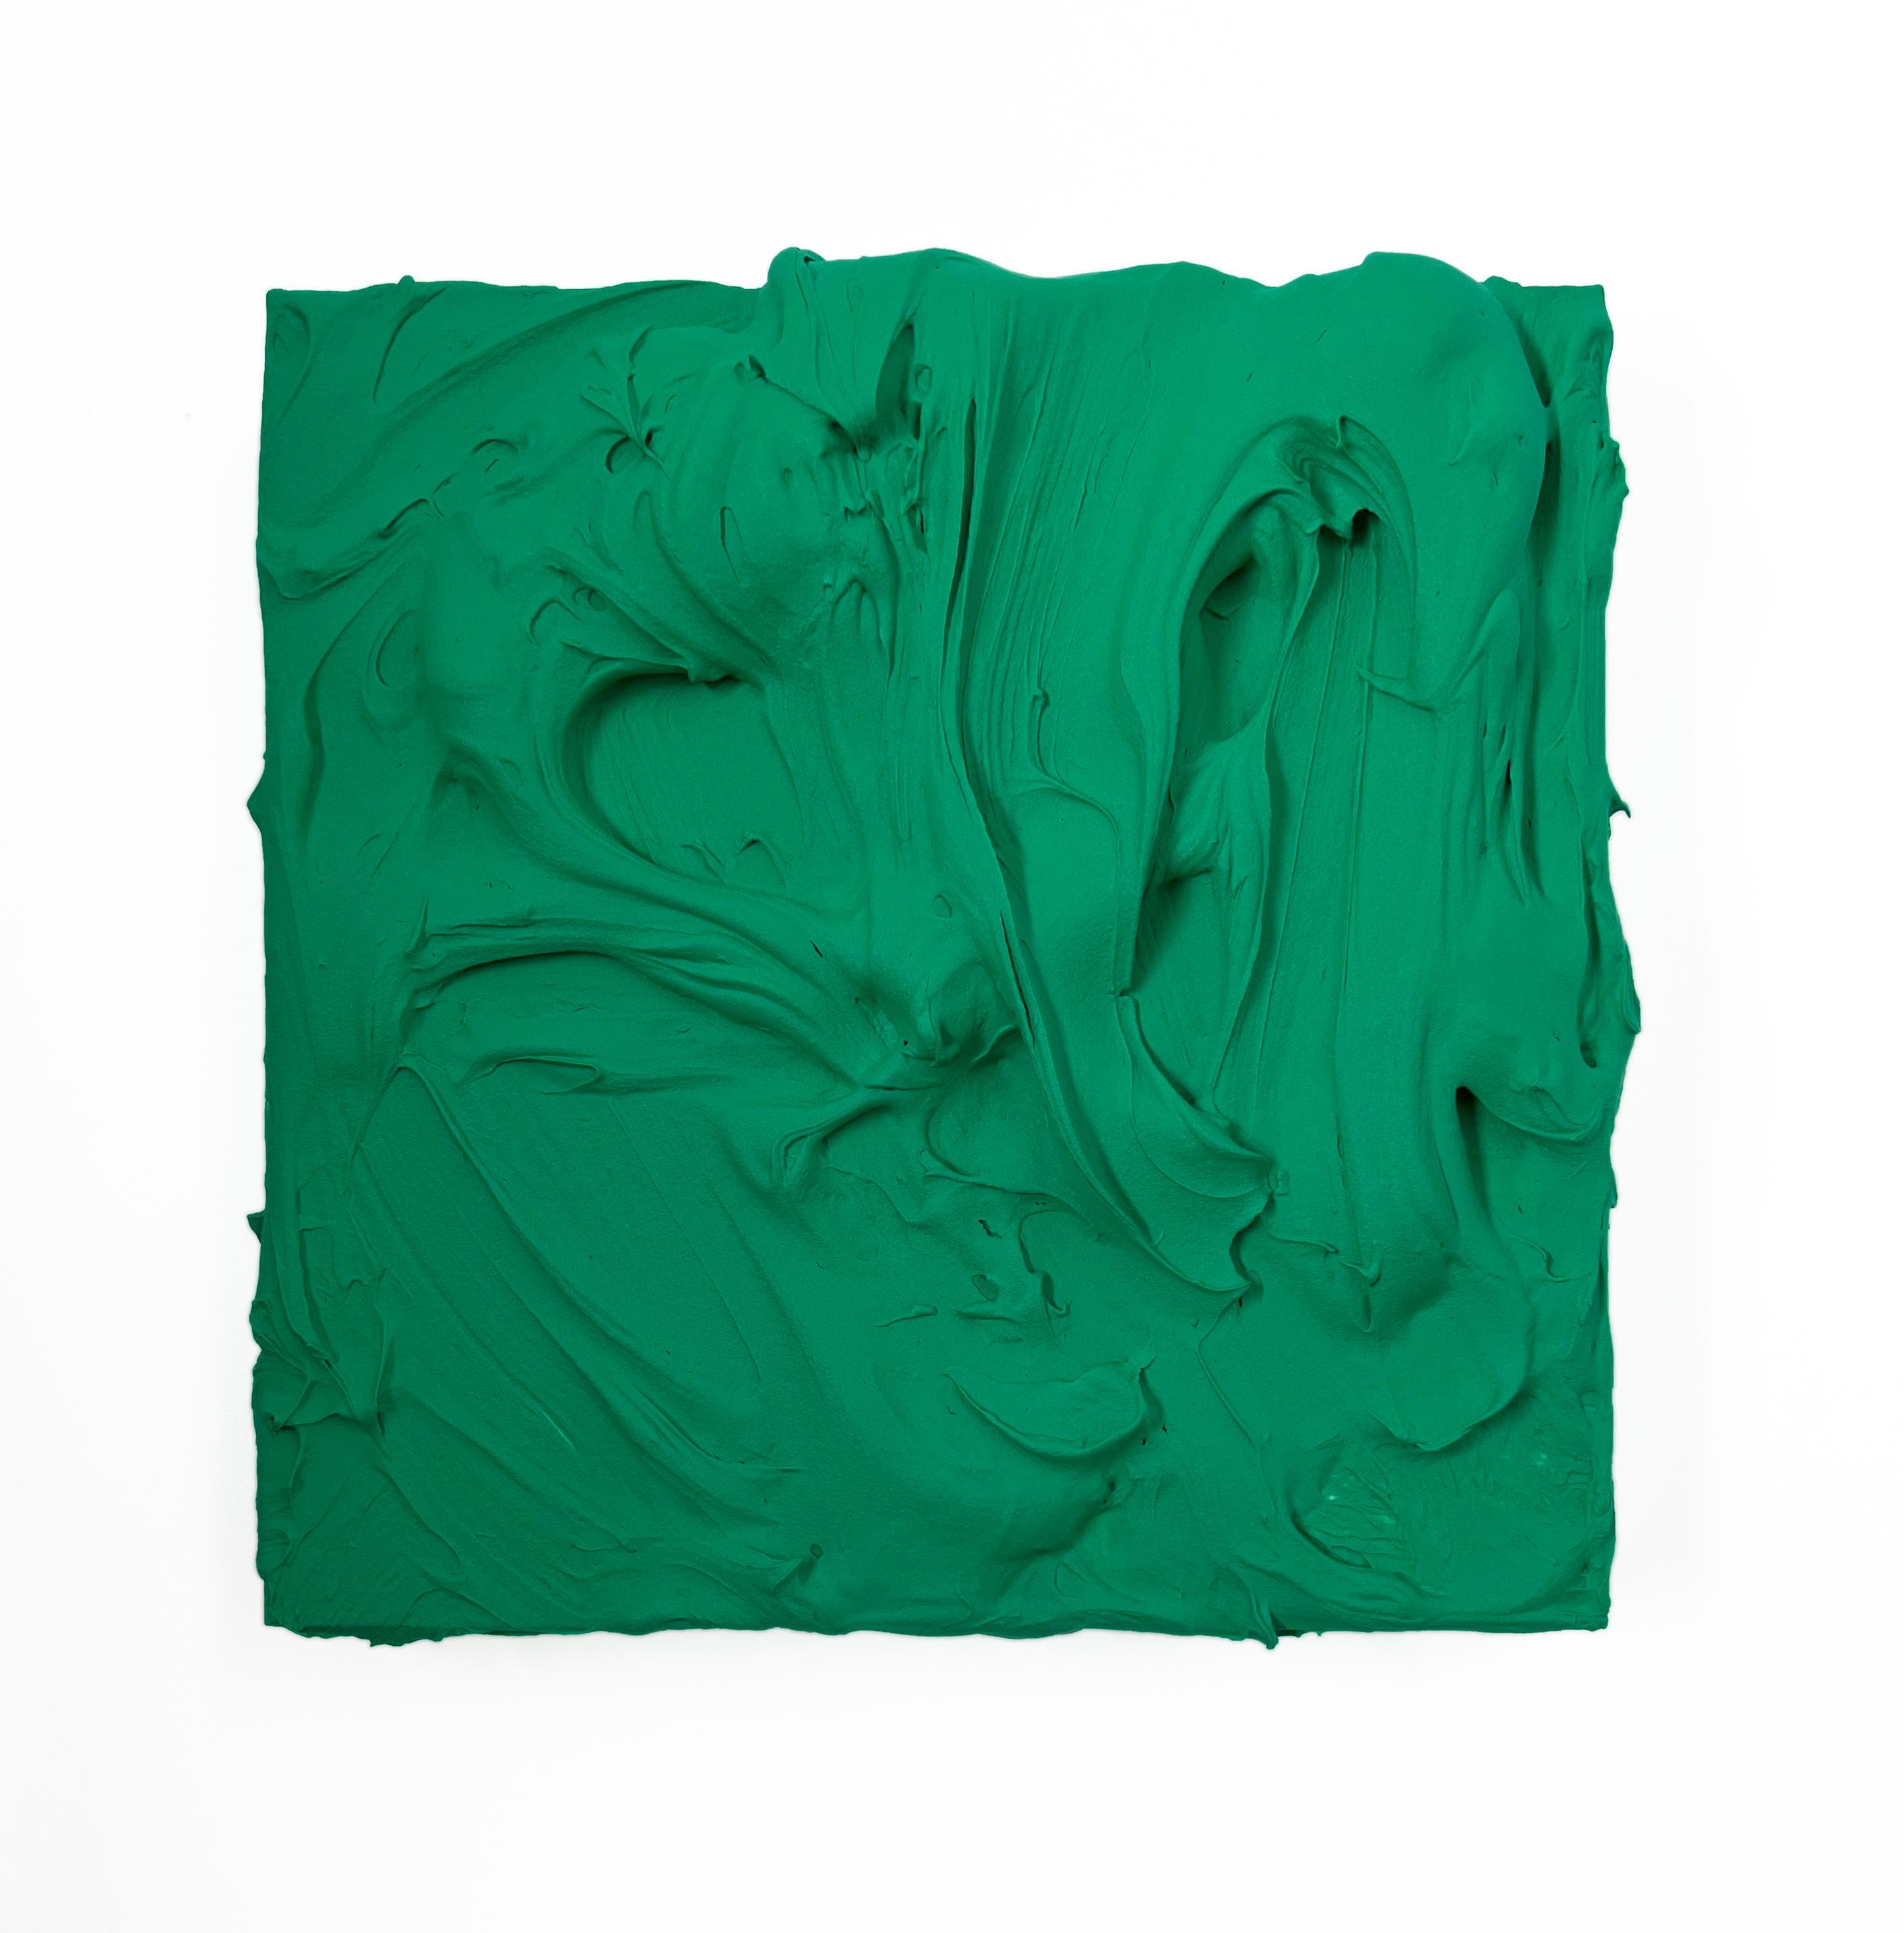 Smaragdgrüner Exzess (pastose, dicke Malerei, monochromes, quadratisches Pop-Art-Design)